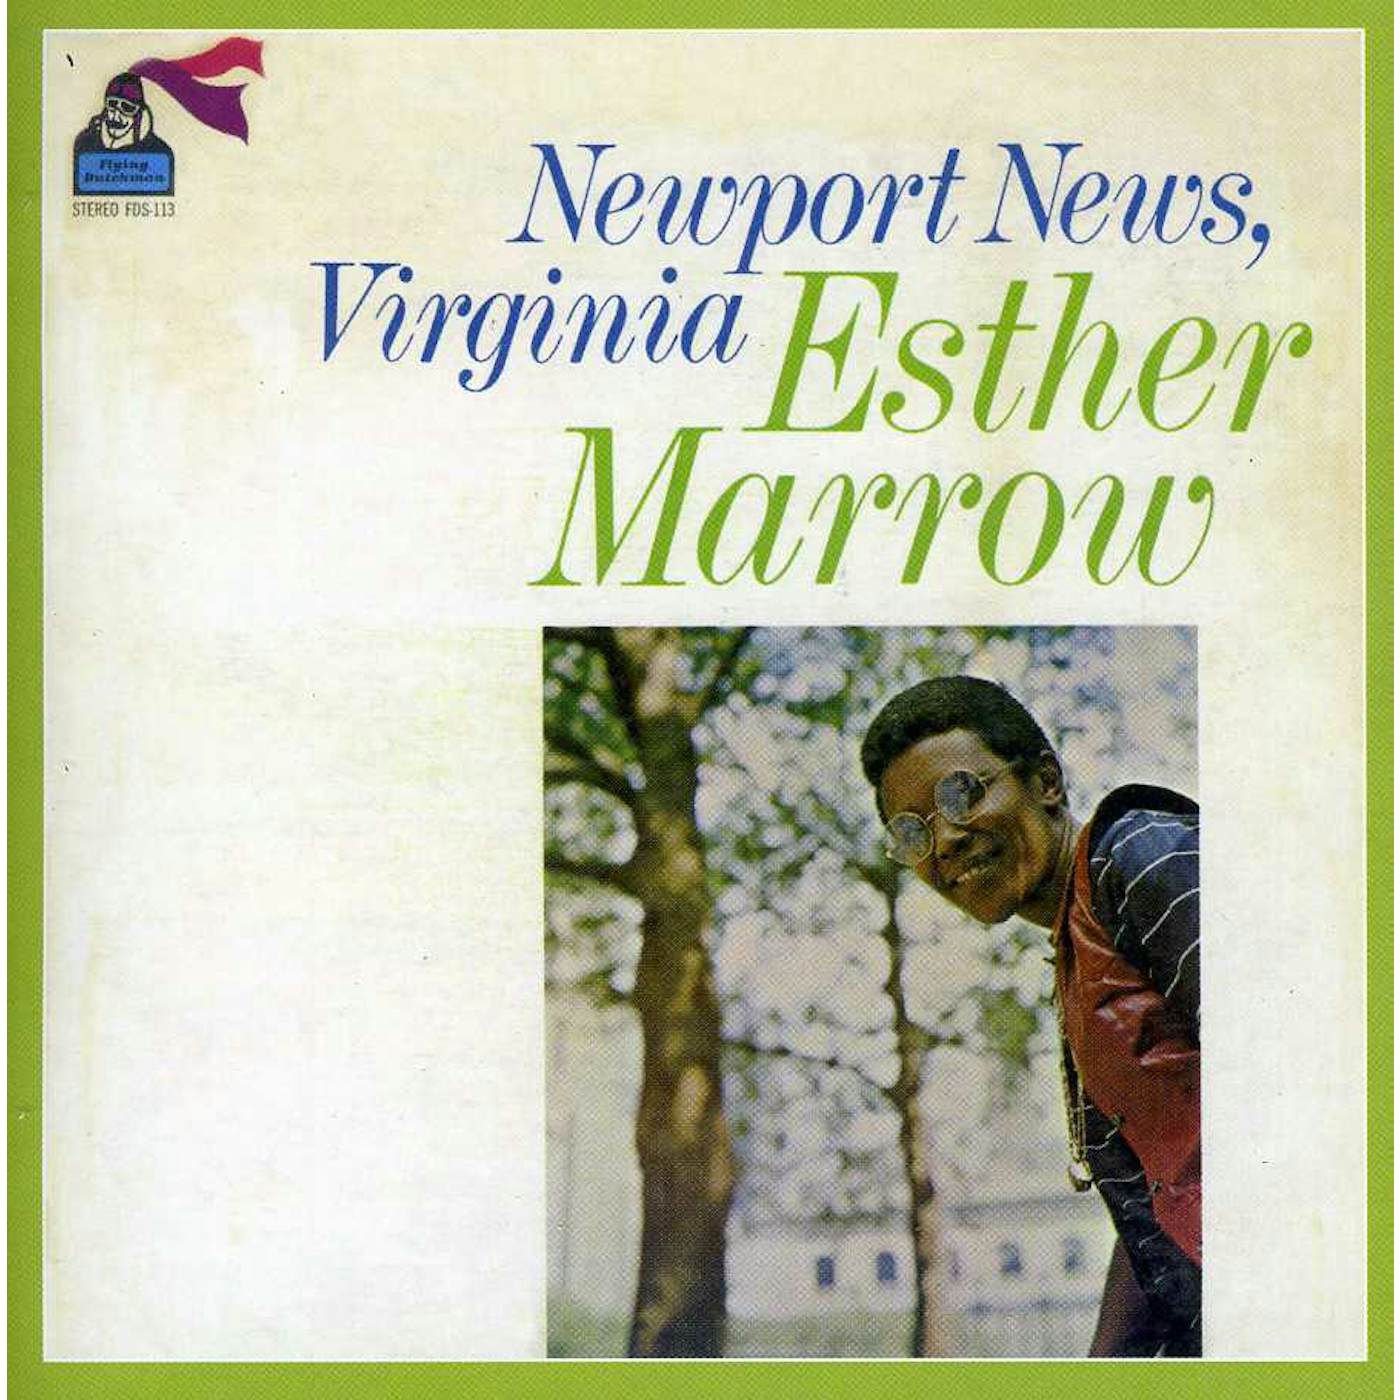 Esther Marrow NEWPORT NEWS VIRGINIA CD